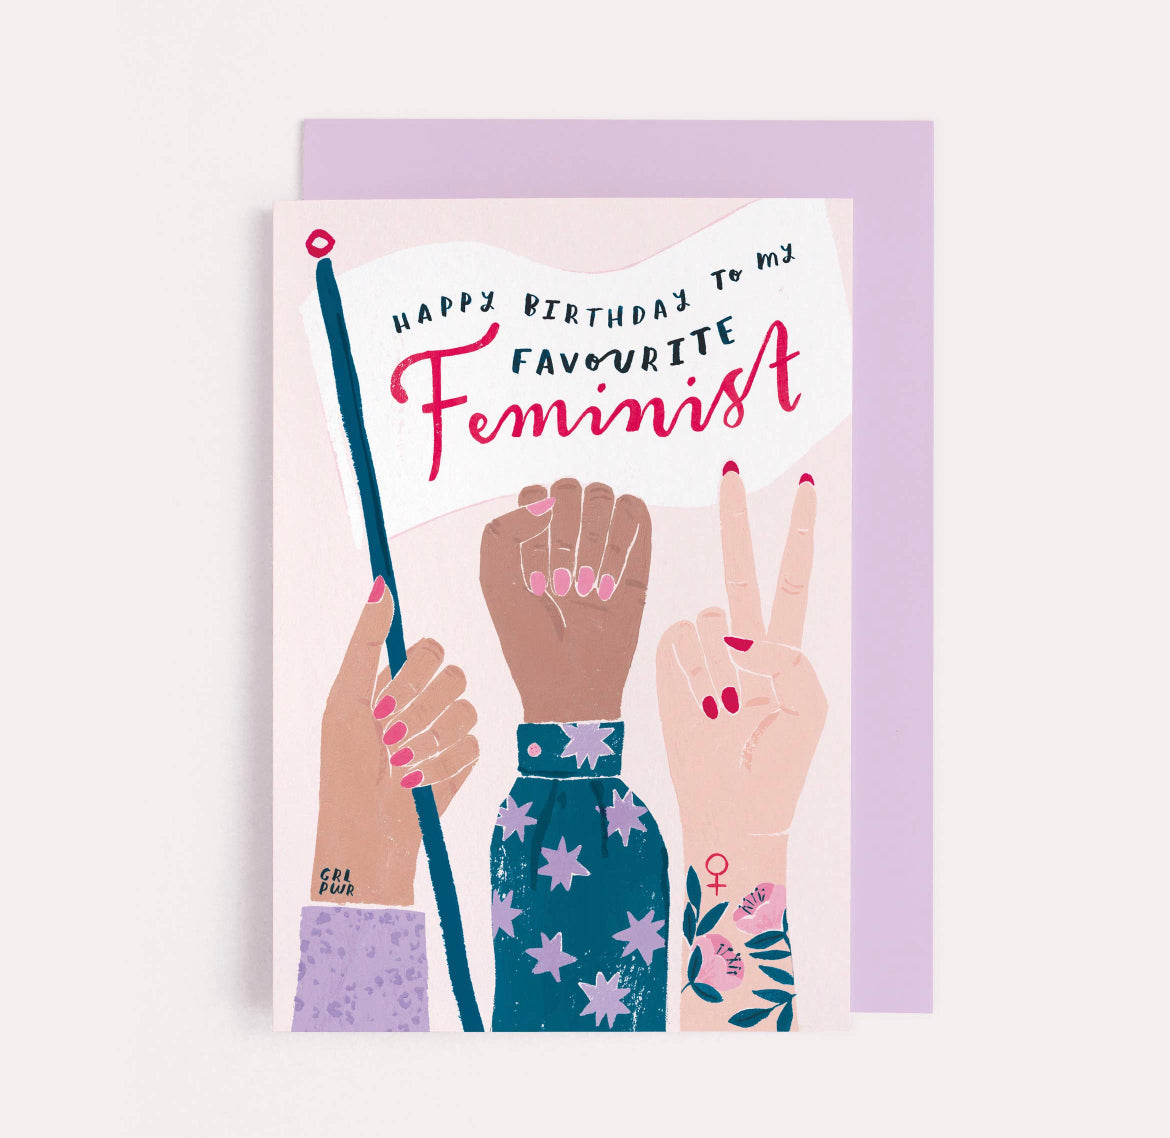 Feminist birthday card